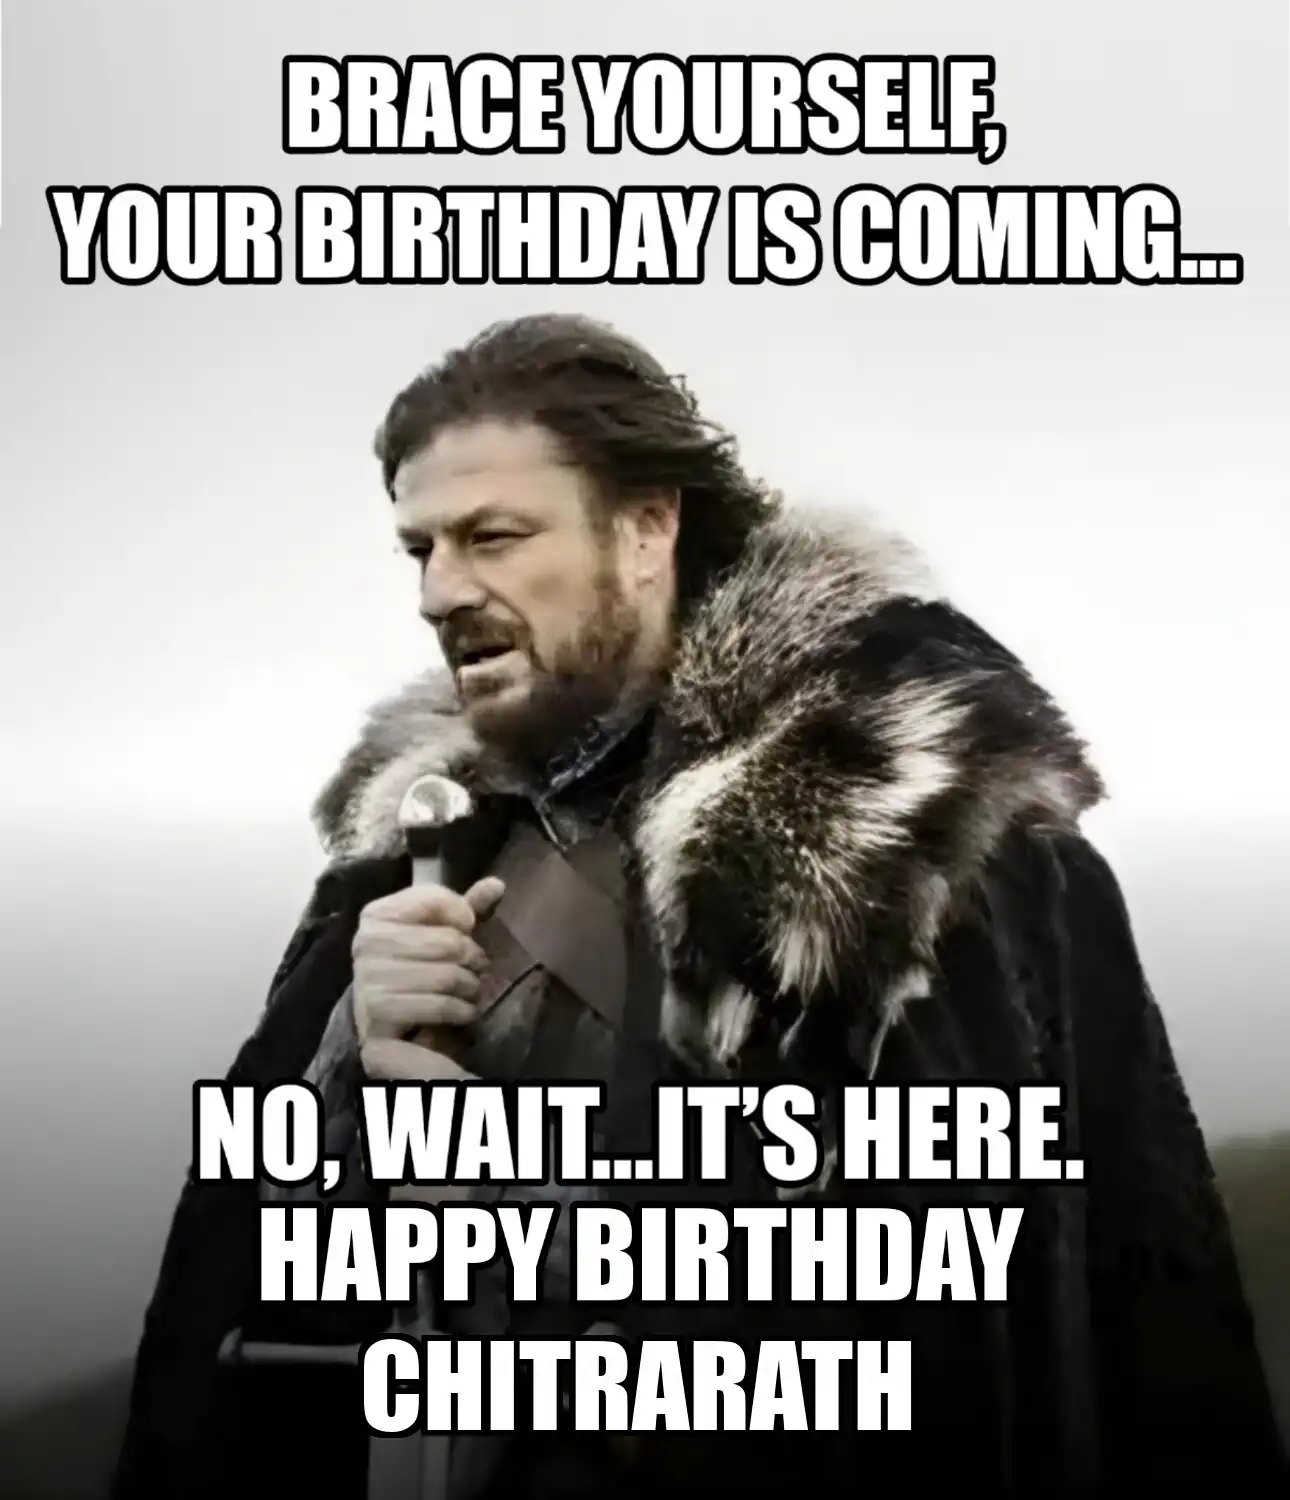 Happy Birthday Chitrarath Brace Yourself Your Birthday Is Coming Meme